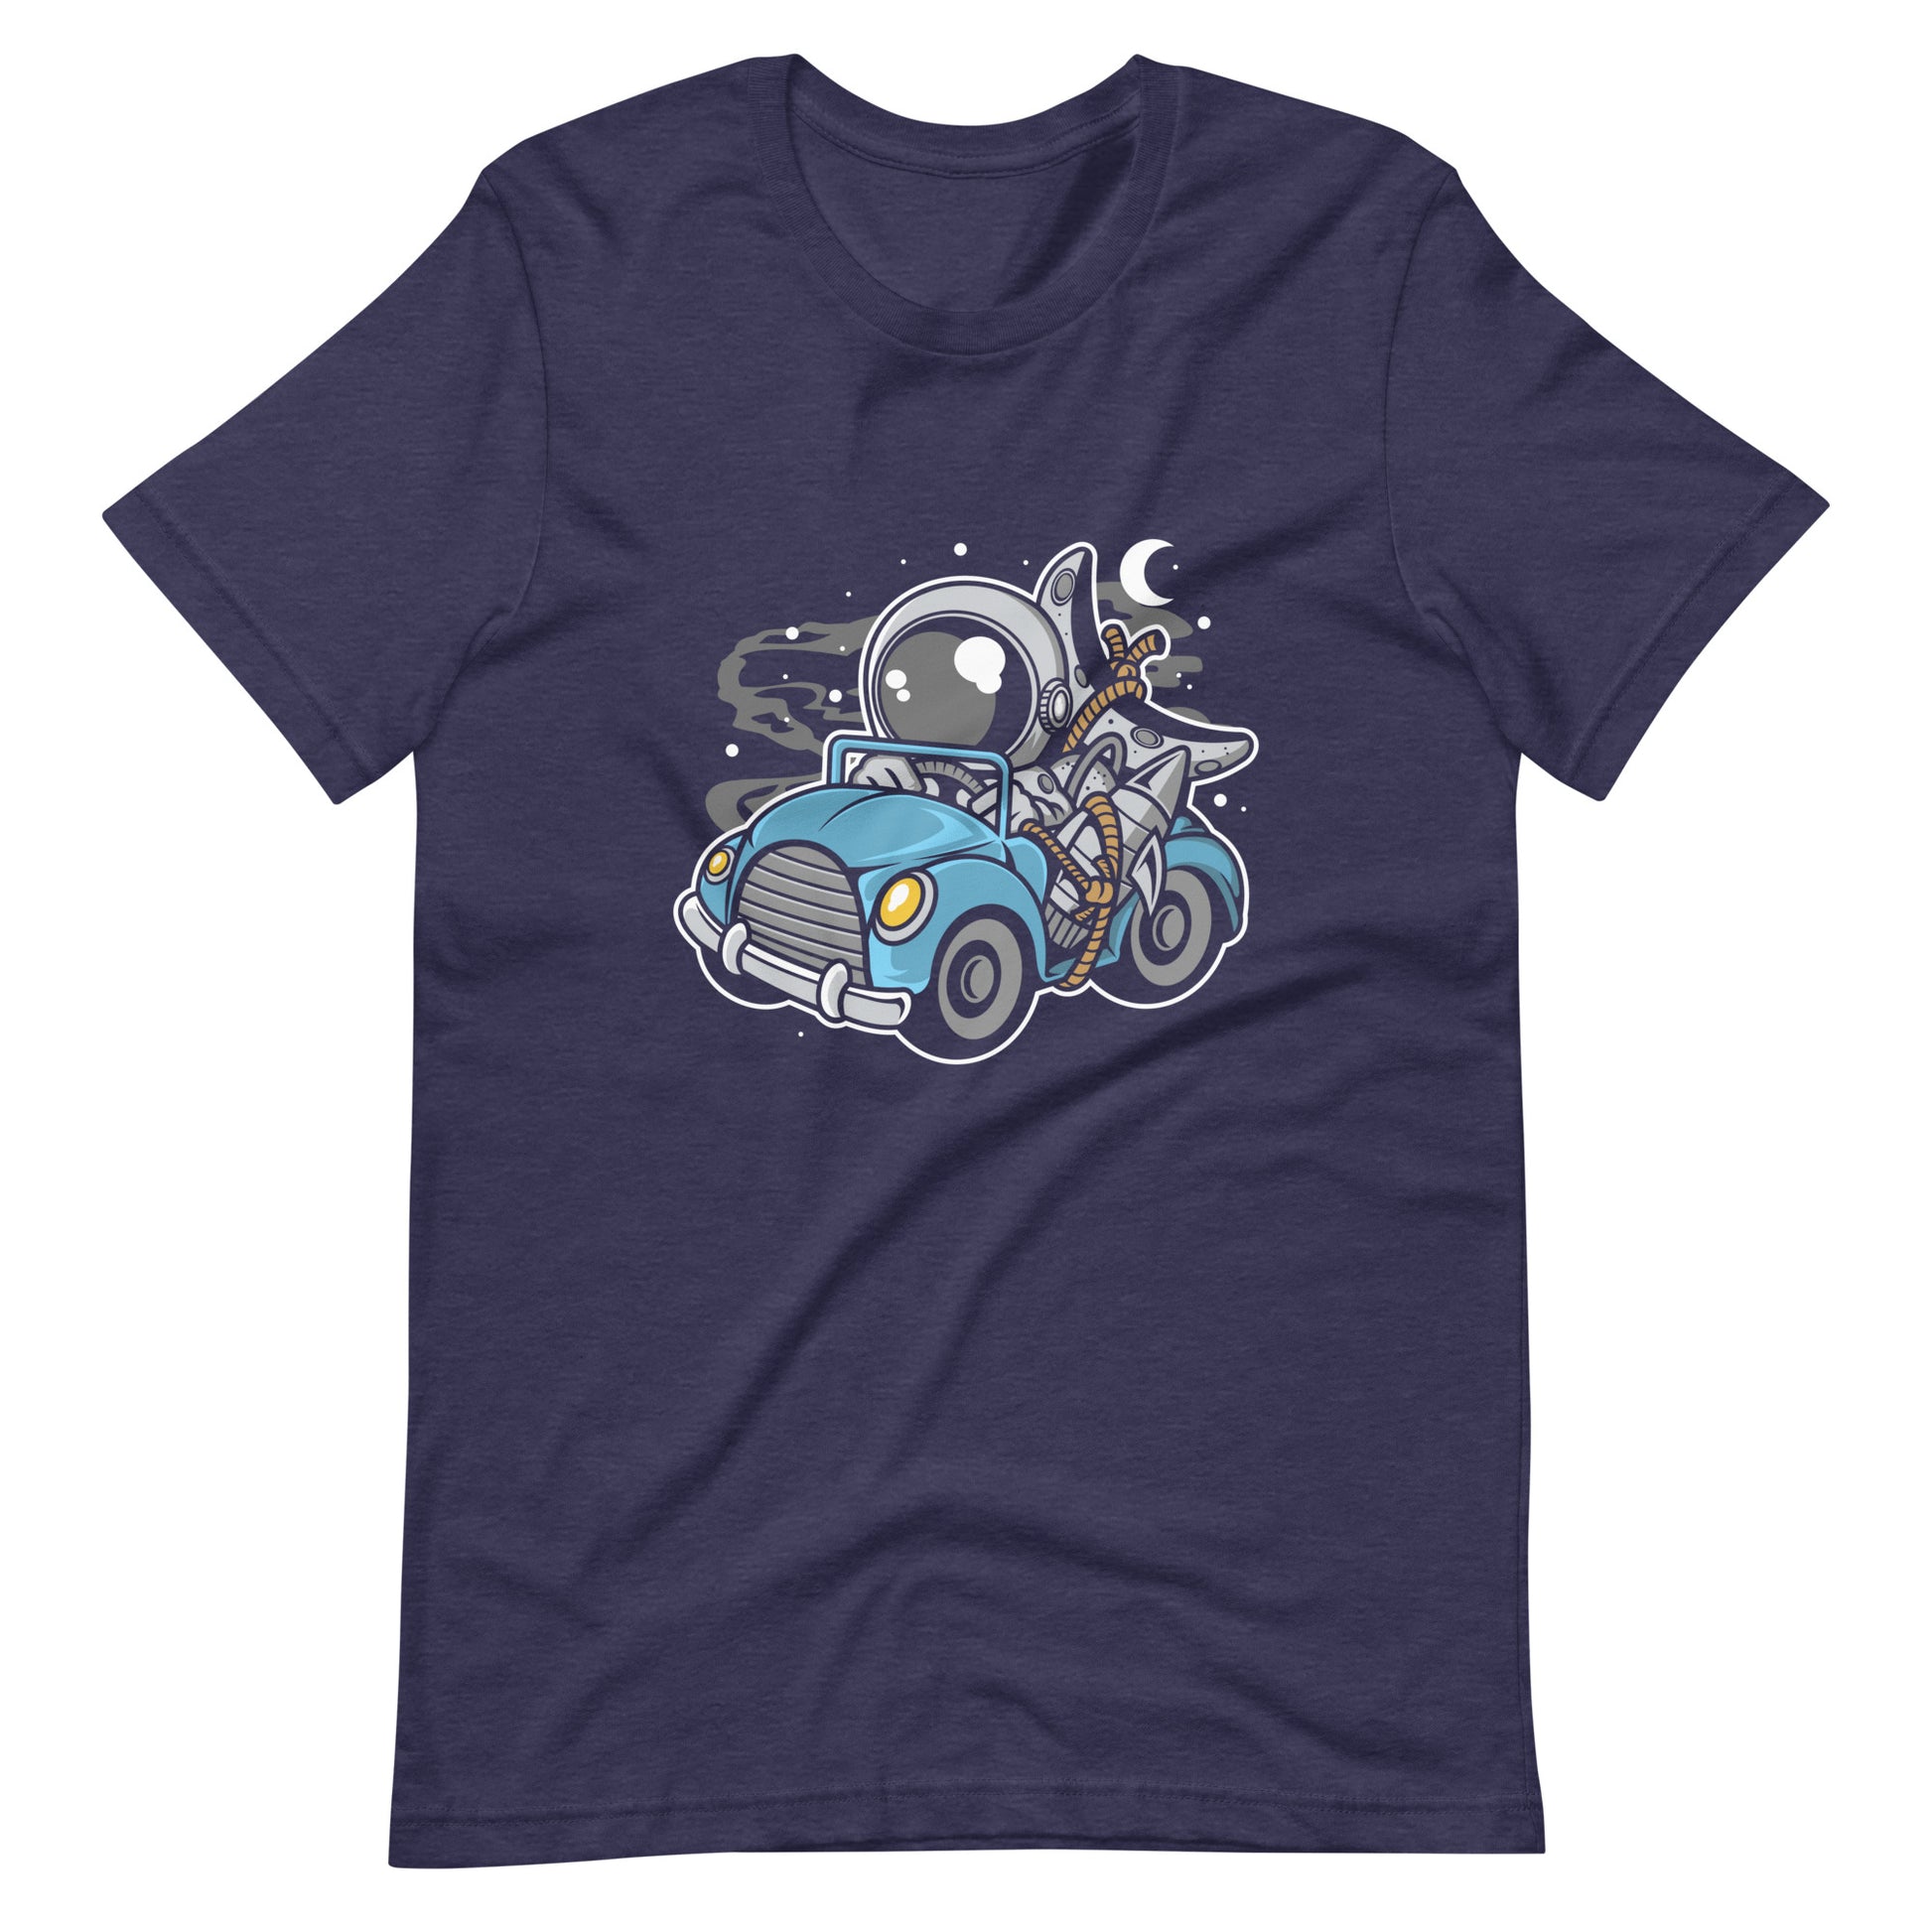 Astronaut Journey - Men's t-shirt - Heather Midnight Navy Front